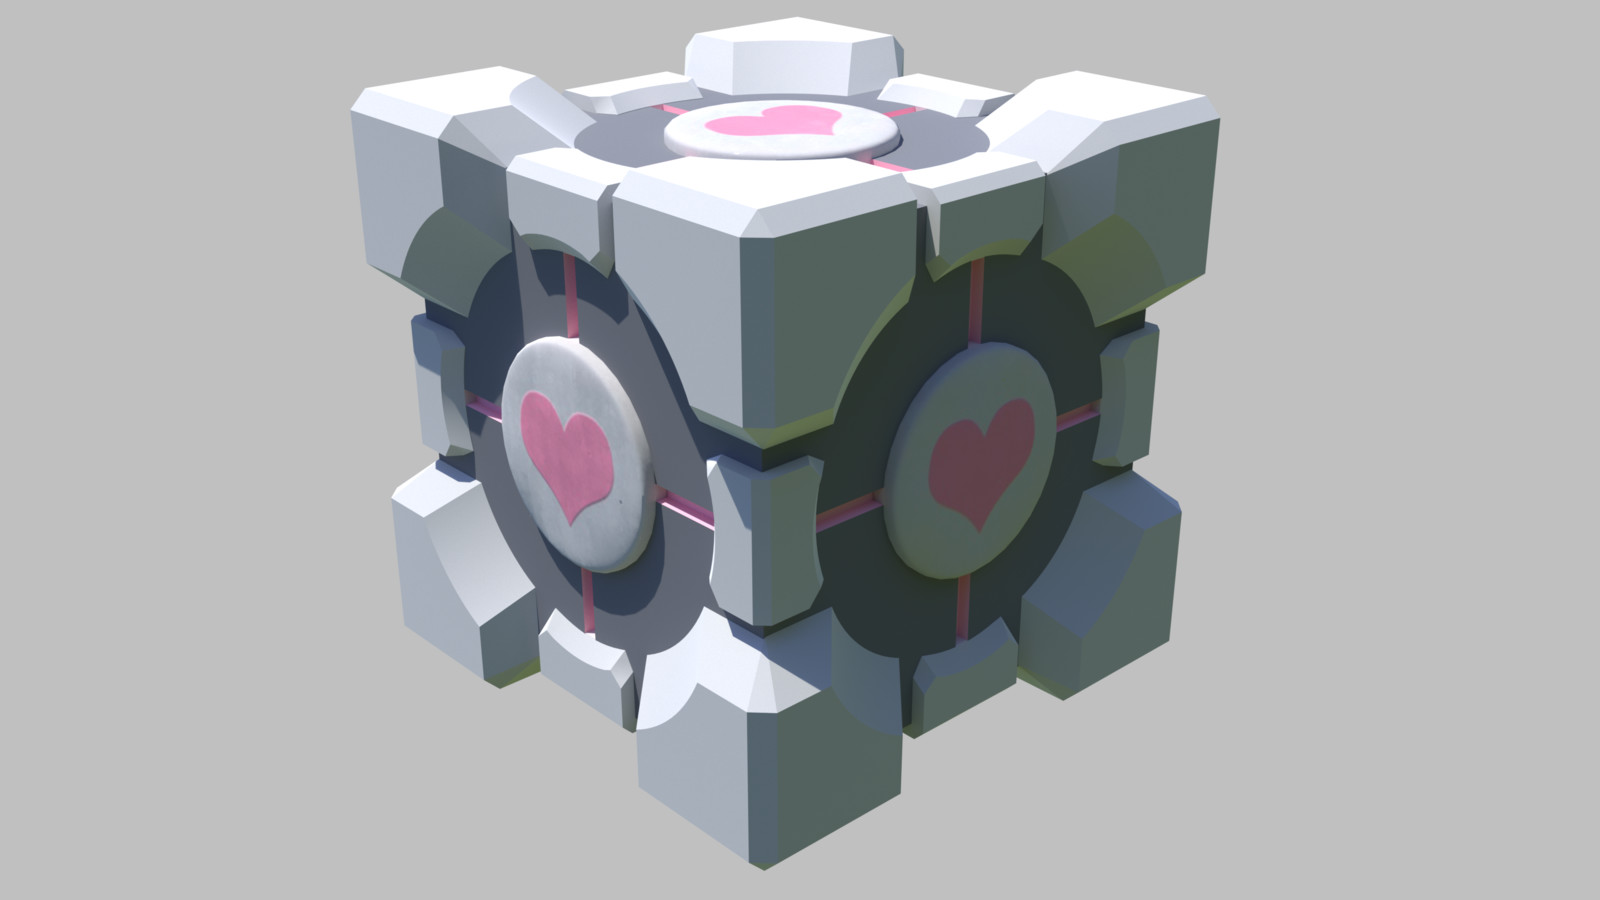 Portal cube. Portal 2 Cube Companion. Кубик из Portal 2. Куб компаньон из портал 2. Грузовой куб из Portal 2.